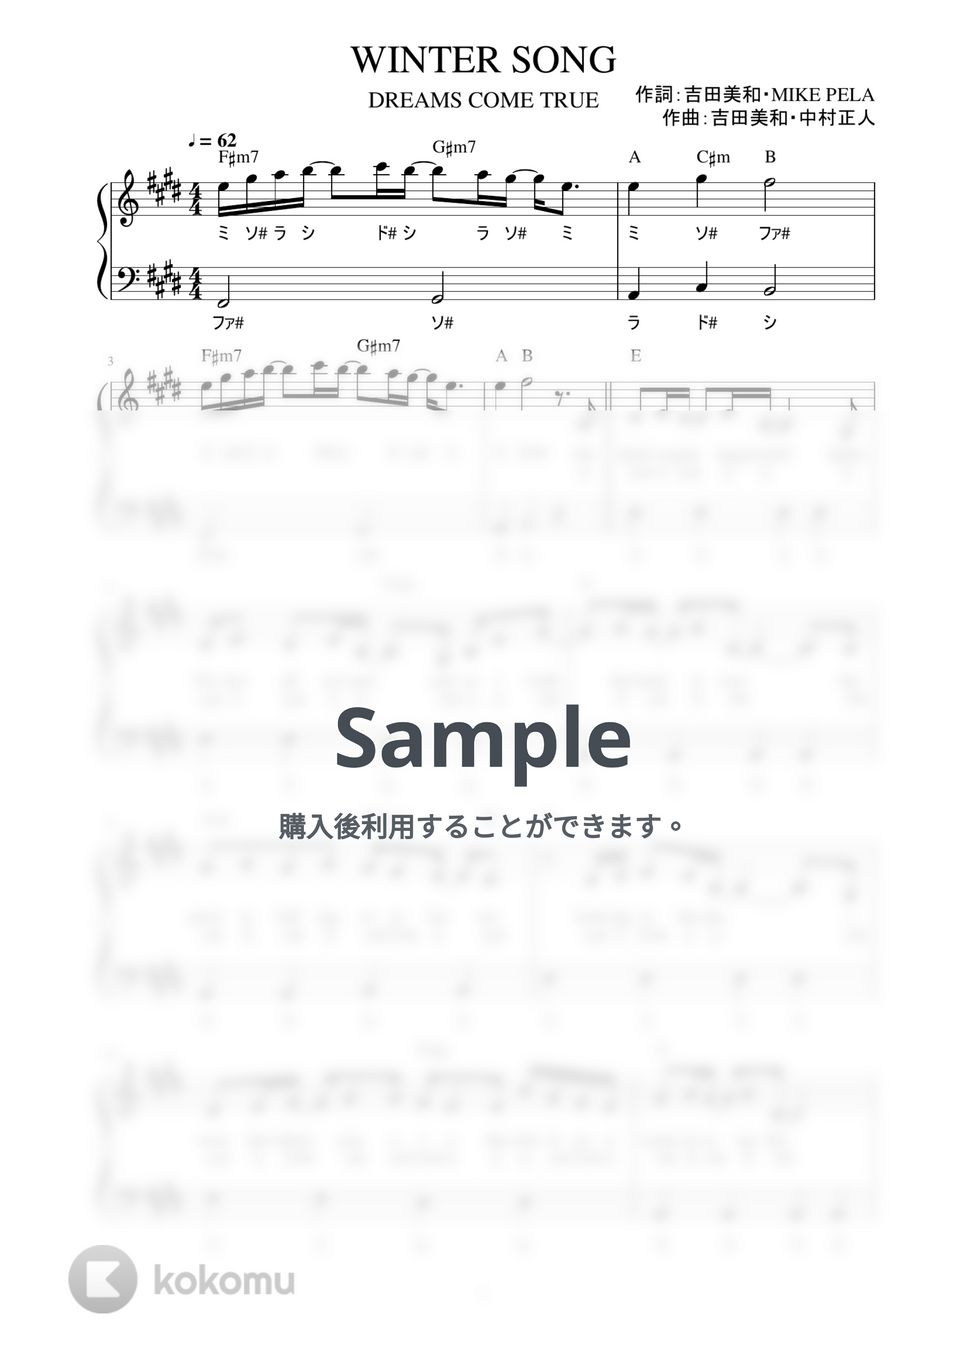 DREAMS COME TRUE - WINTER SONG (ピアノ楽譜 / かんたん両手 / 歌詞付き / ドレミ付き / 初心者向き) by piano.tokyo